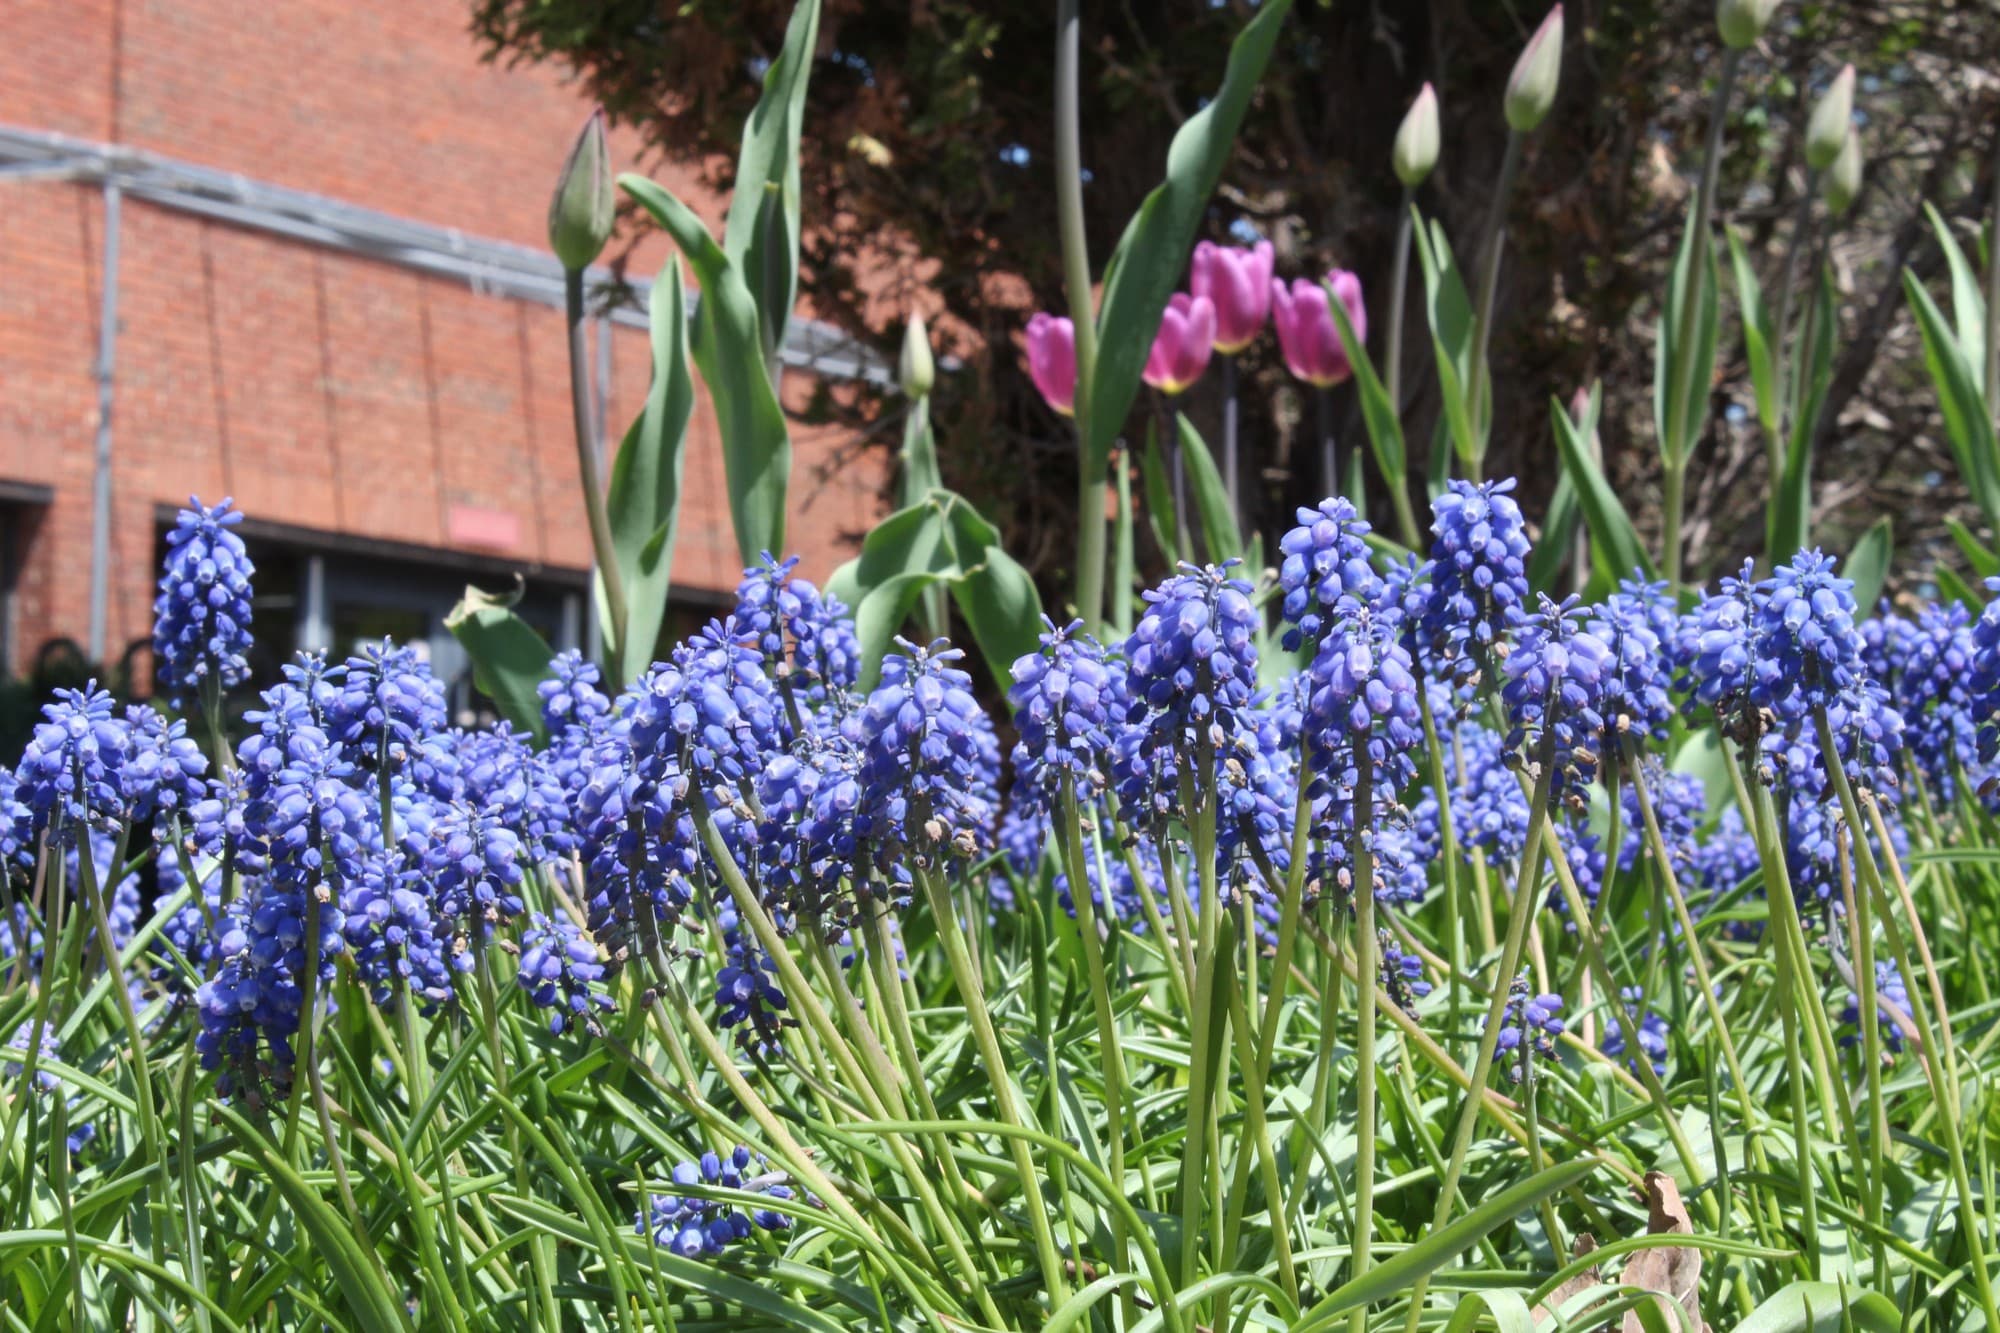 Flowers in Algonquin's N-building courtyard garden this summer